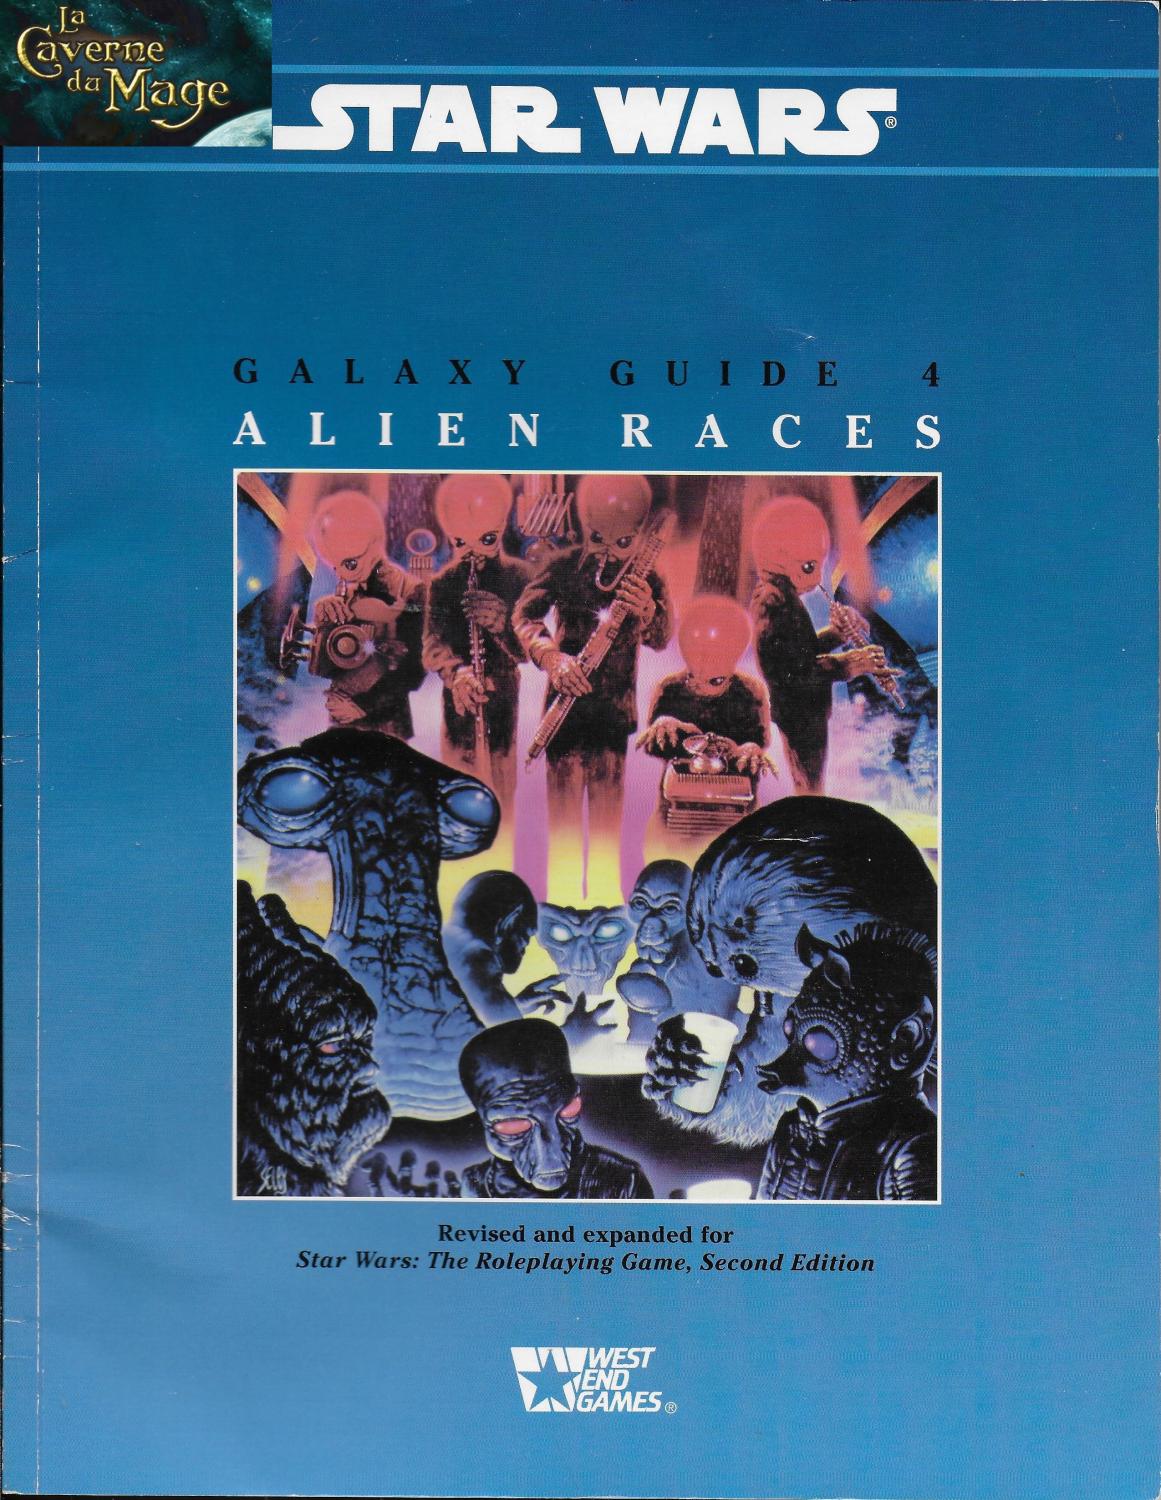 STAR WARS 1st Edition - Galaxy Guide 4, Alien Races